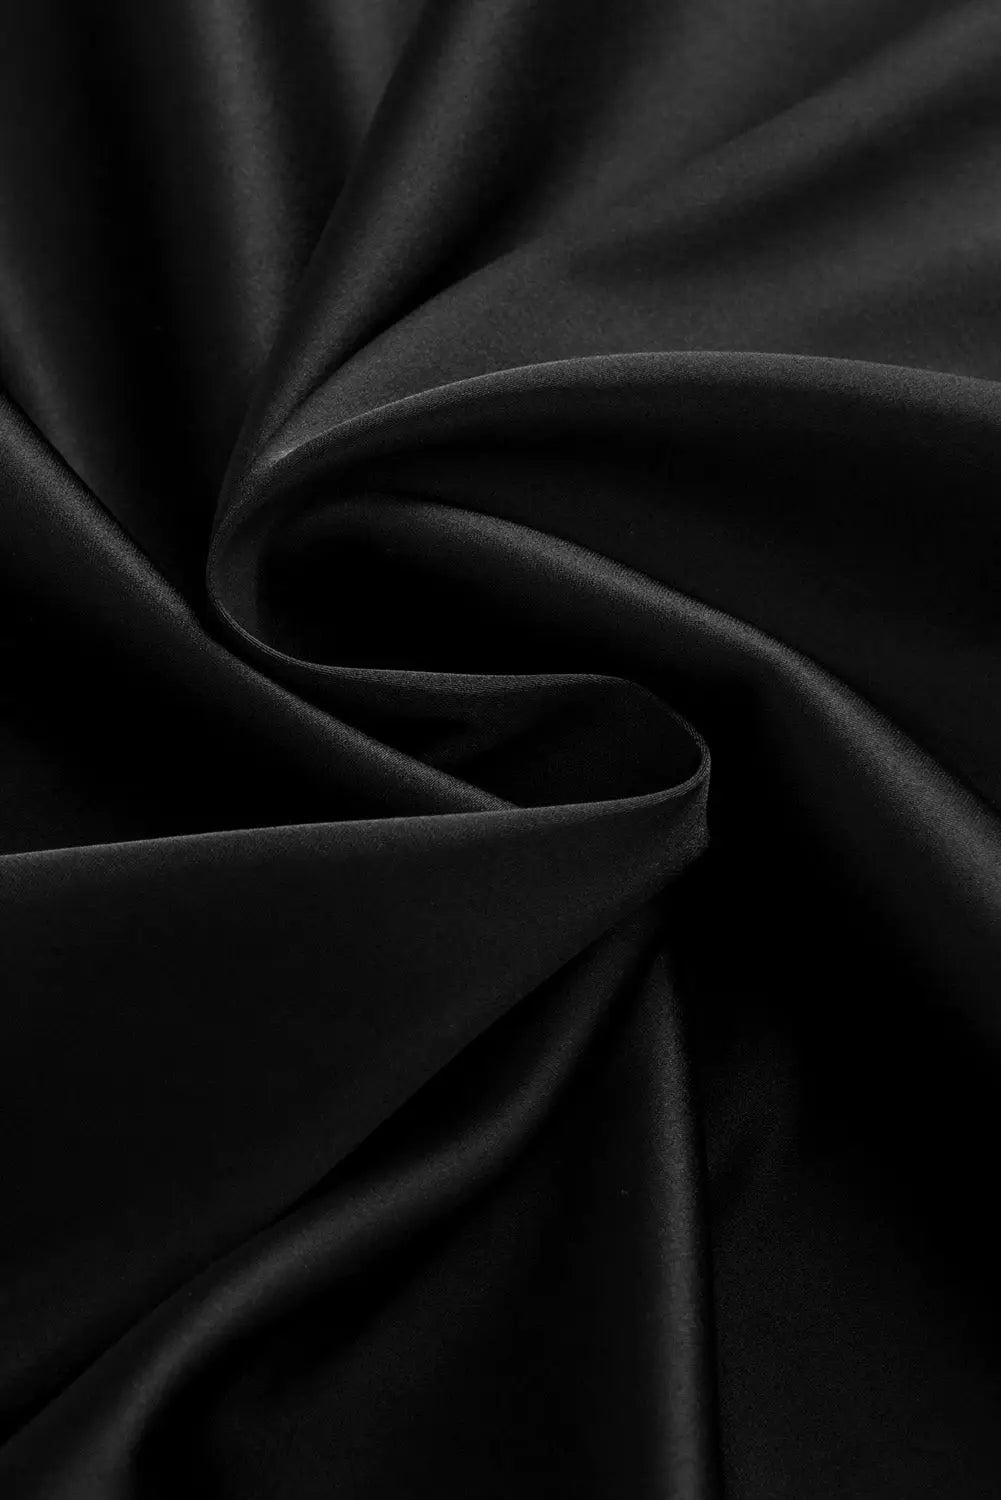 Black plus size sequined v neck top - size/plus tops/plus tops & tees